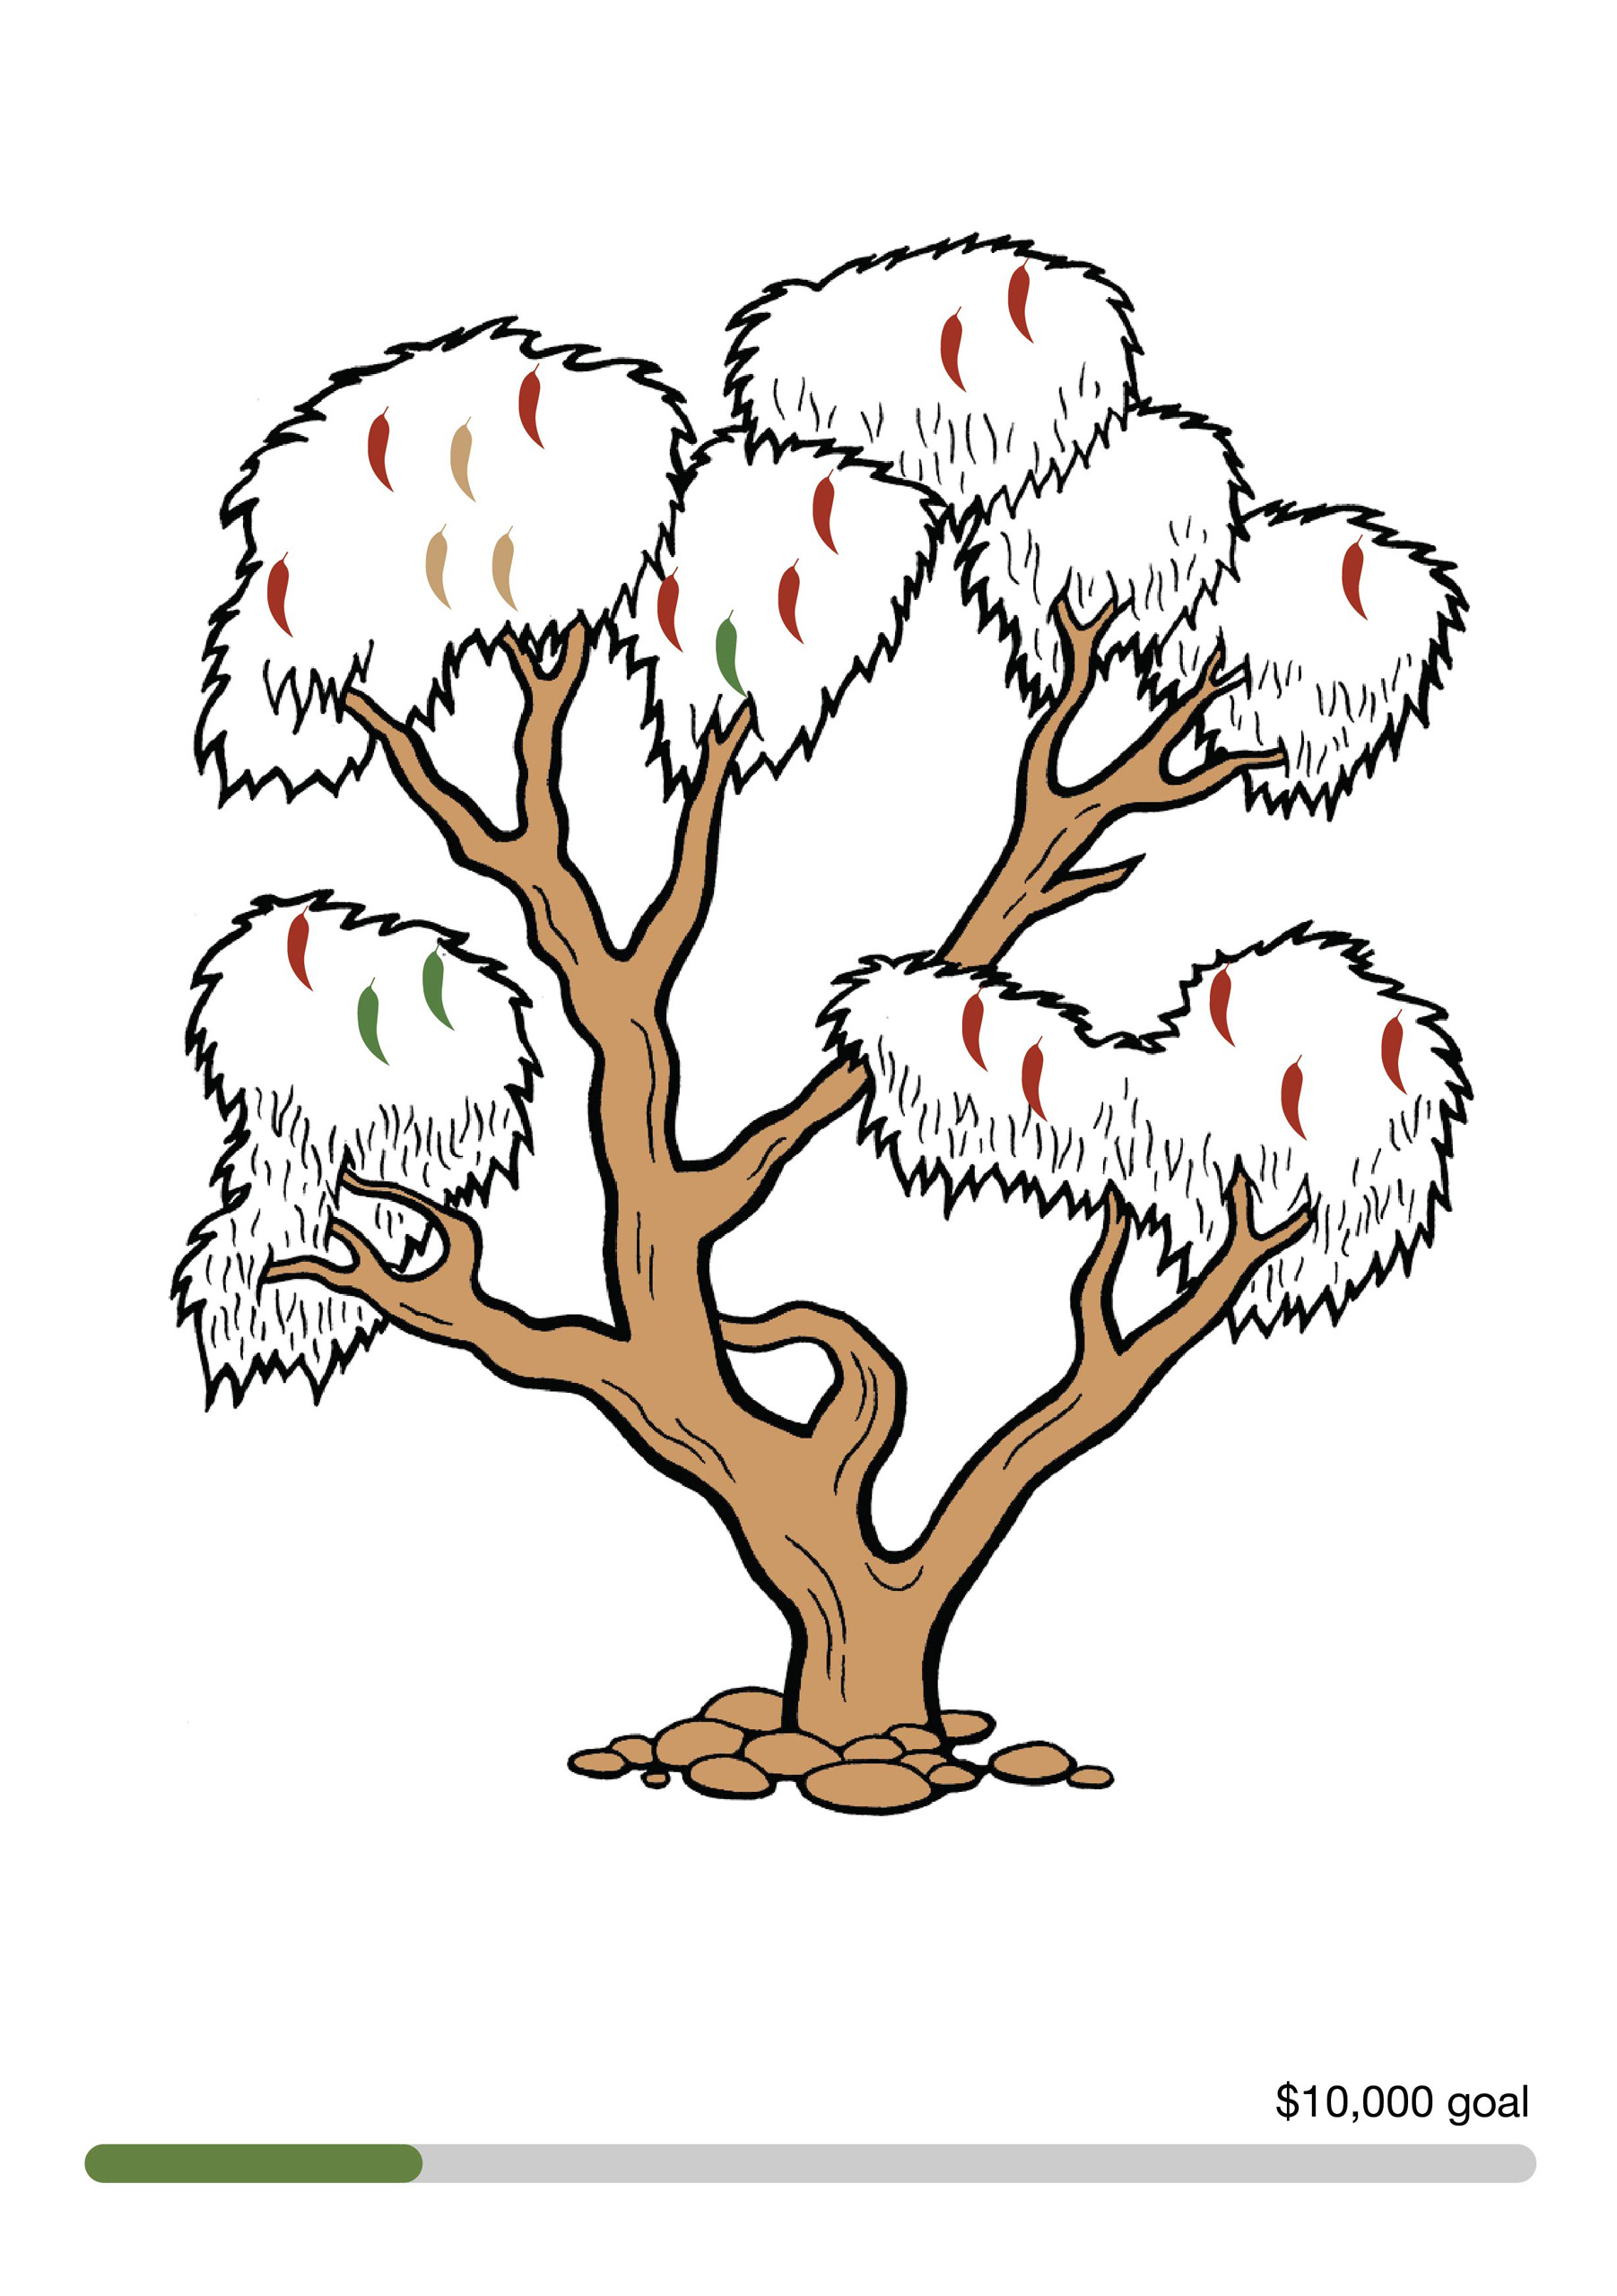 Gumleaf donation tree illustration